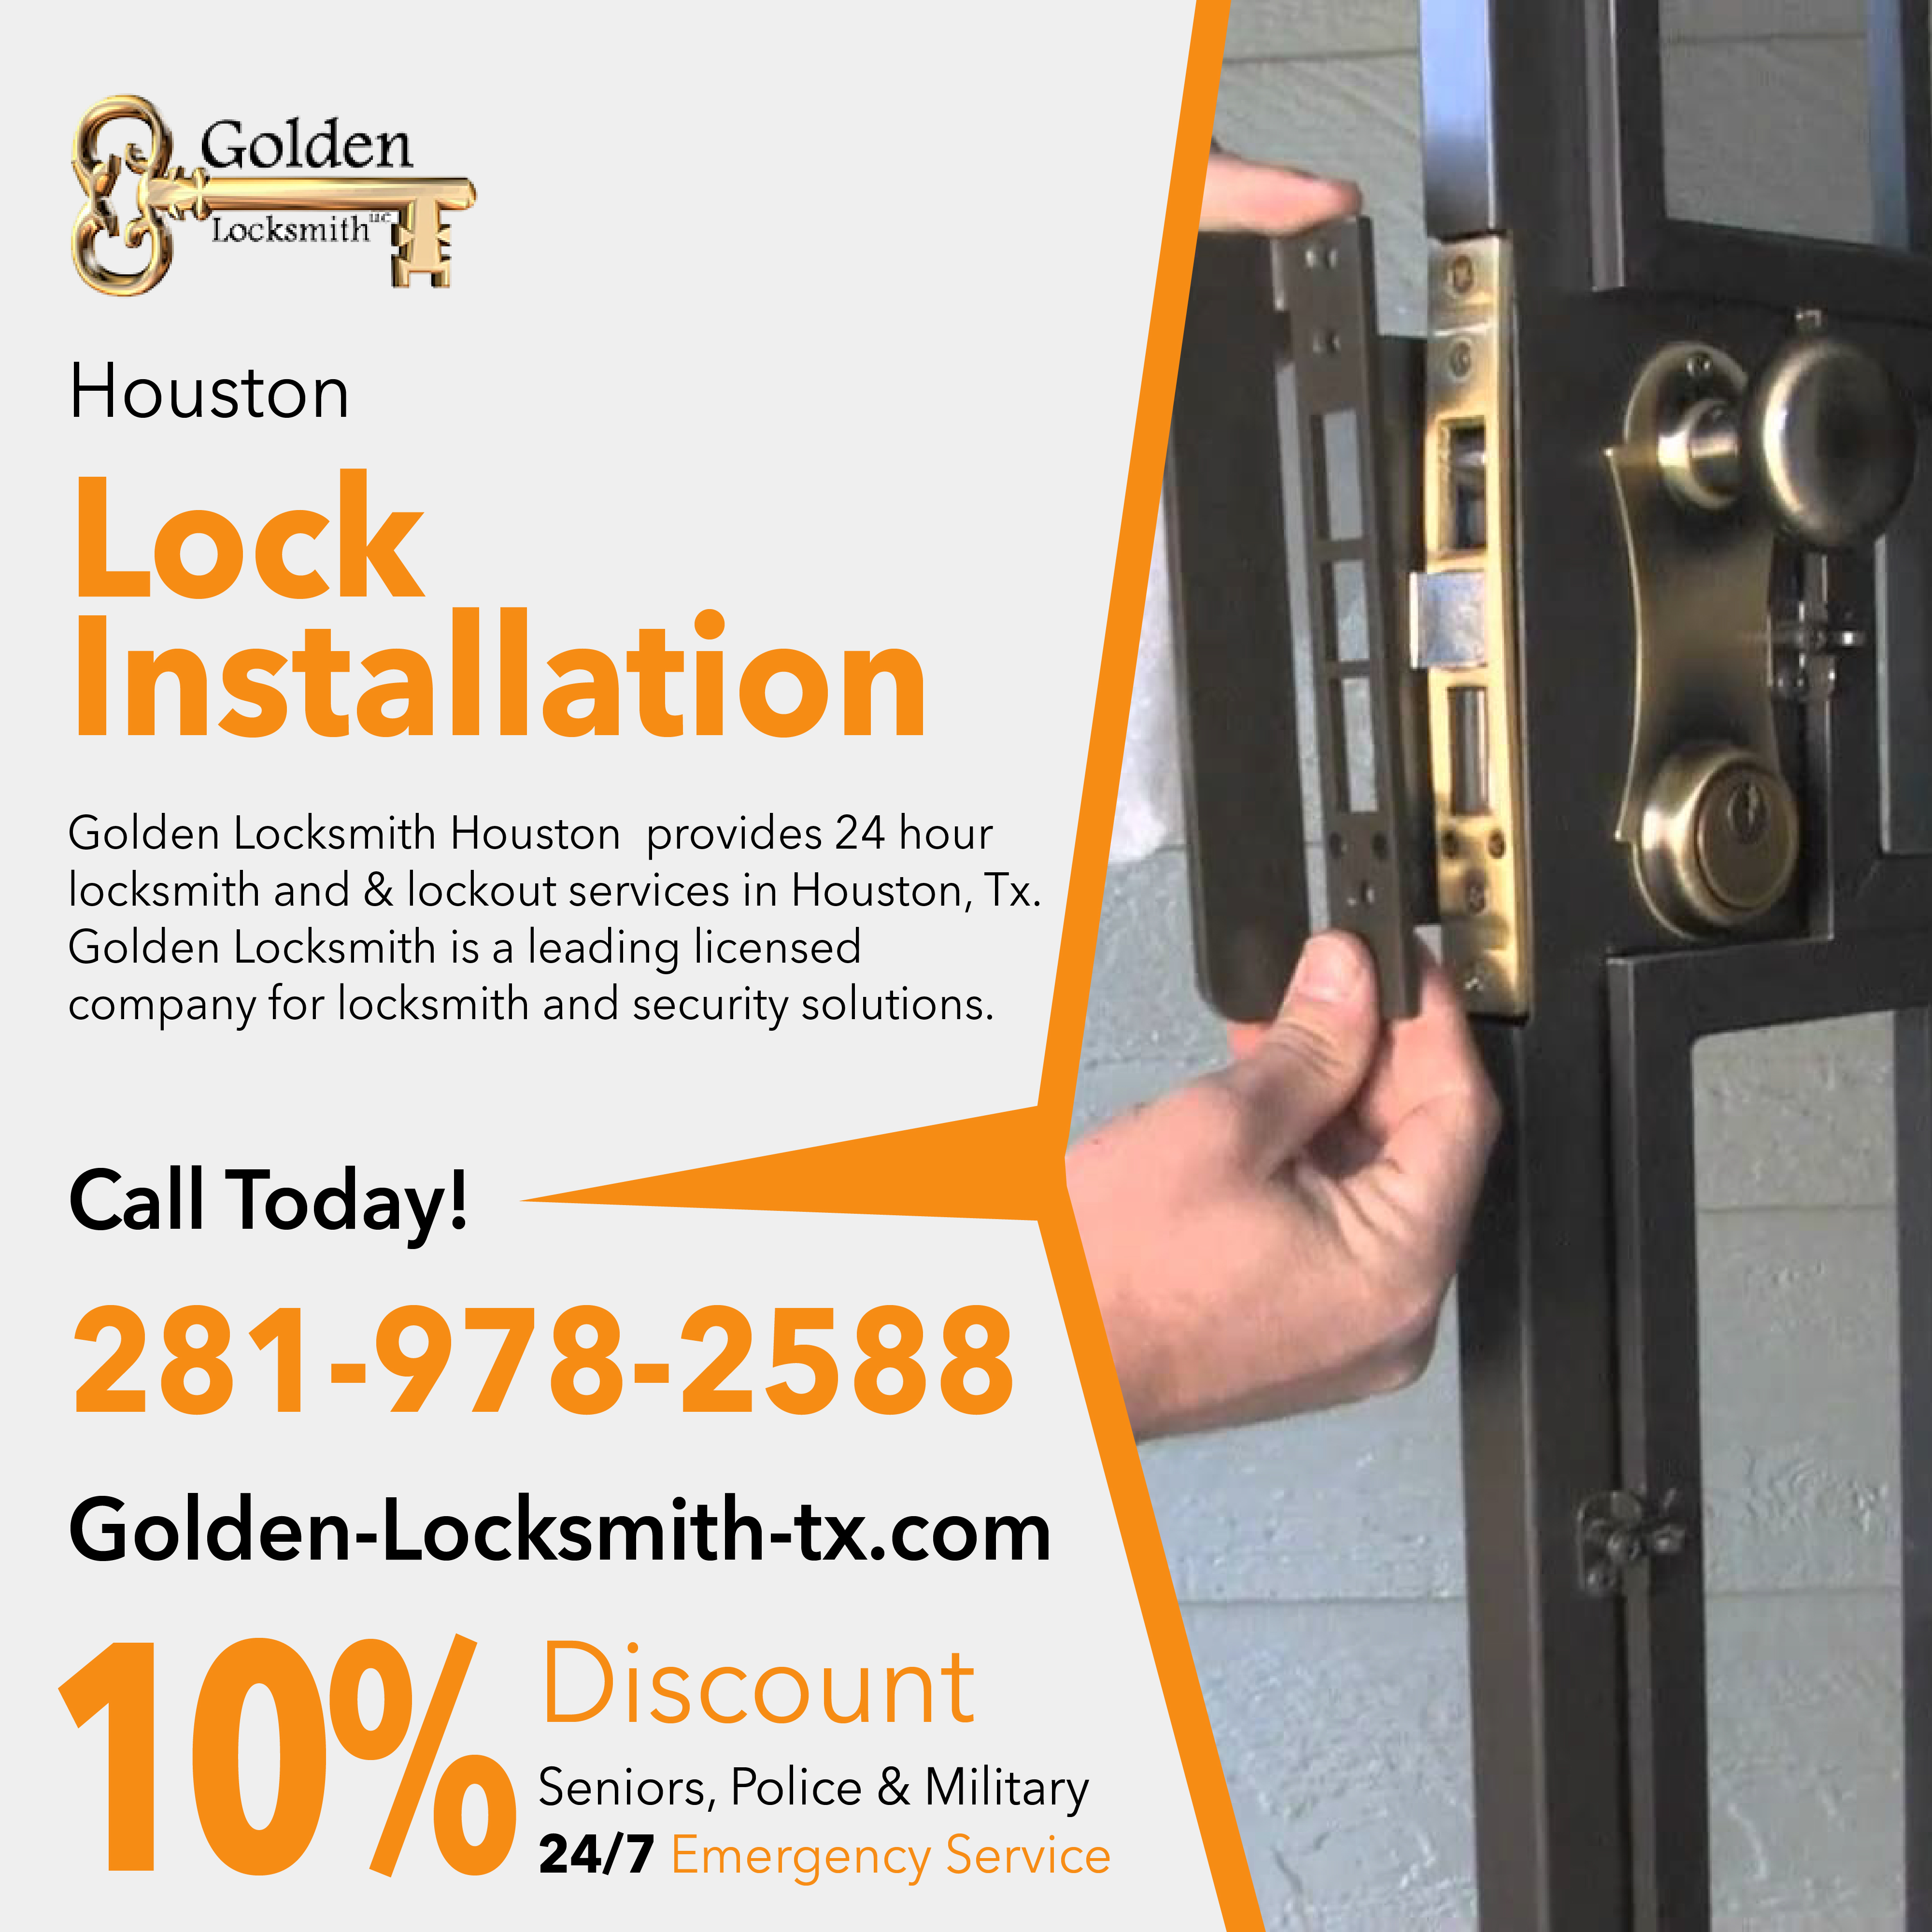 Golden Locksmith Houston Photo